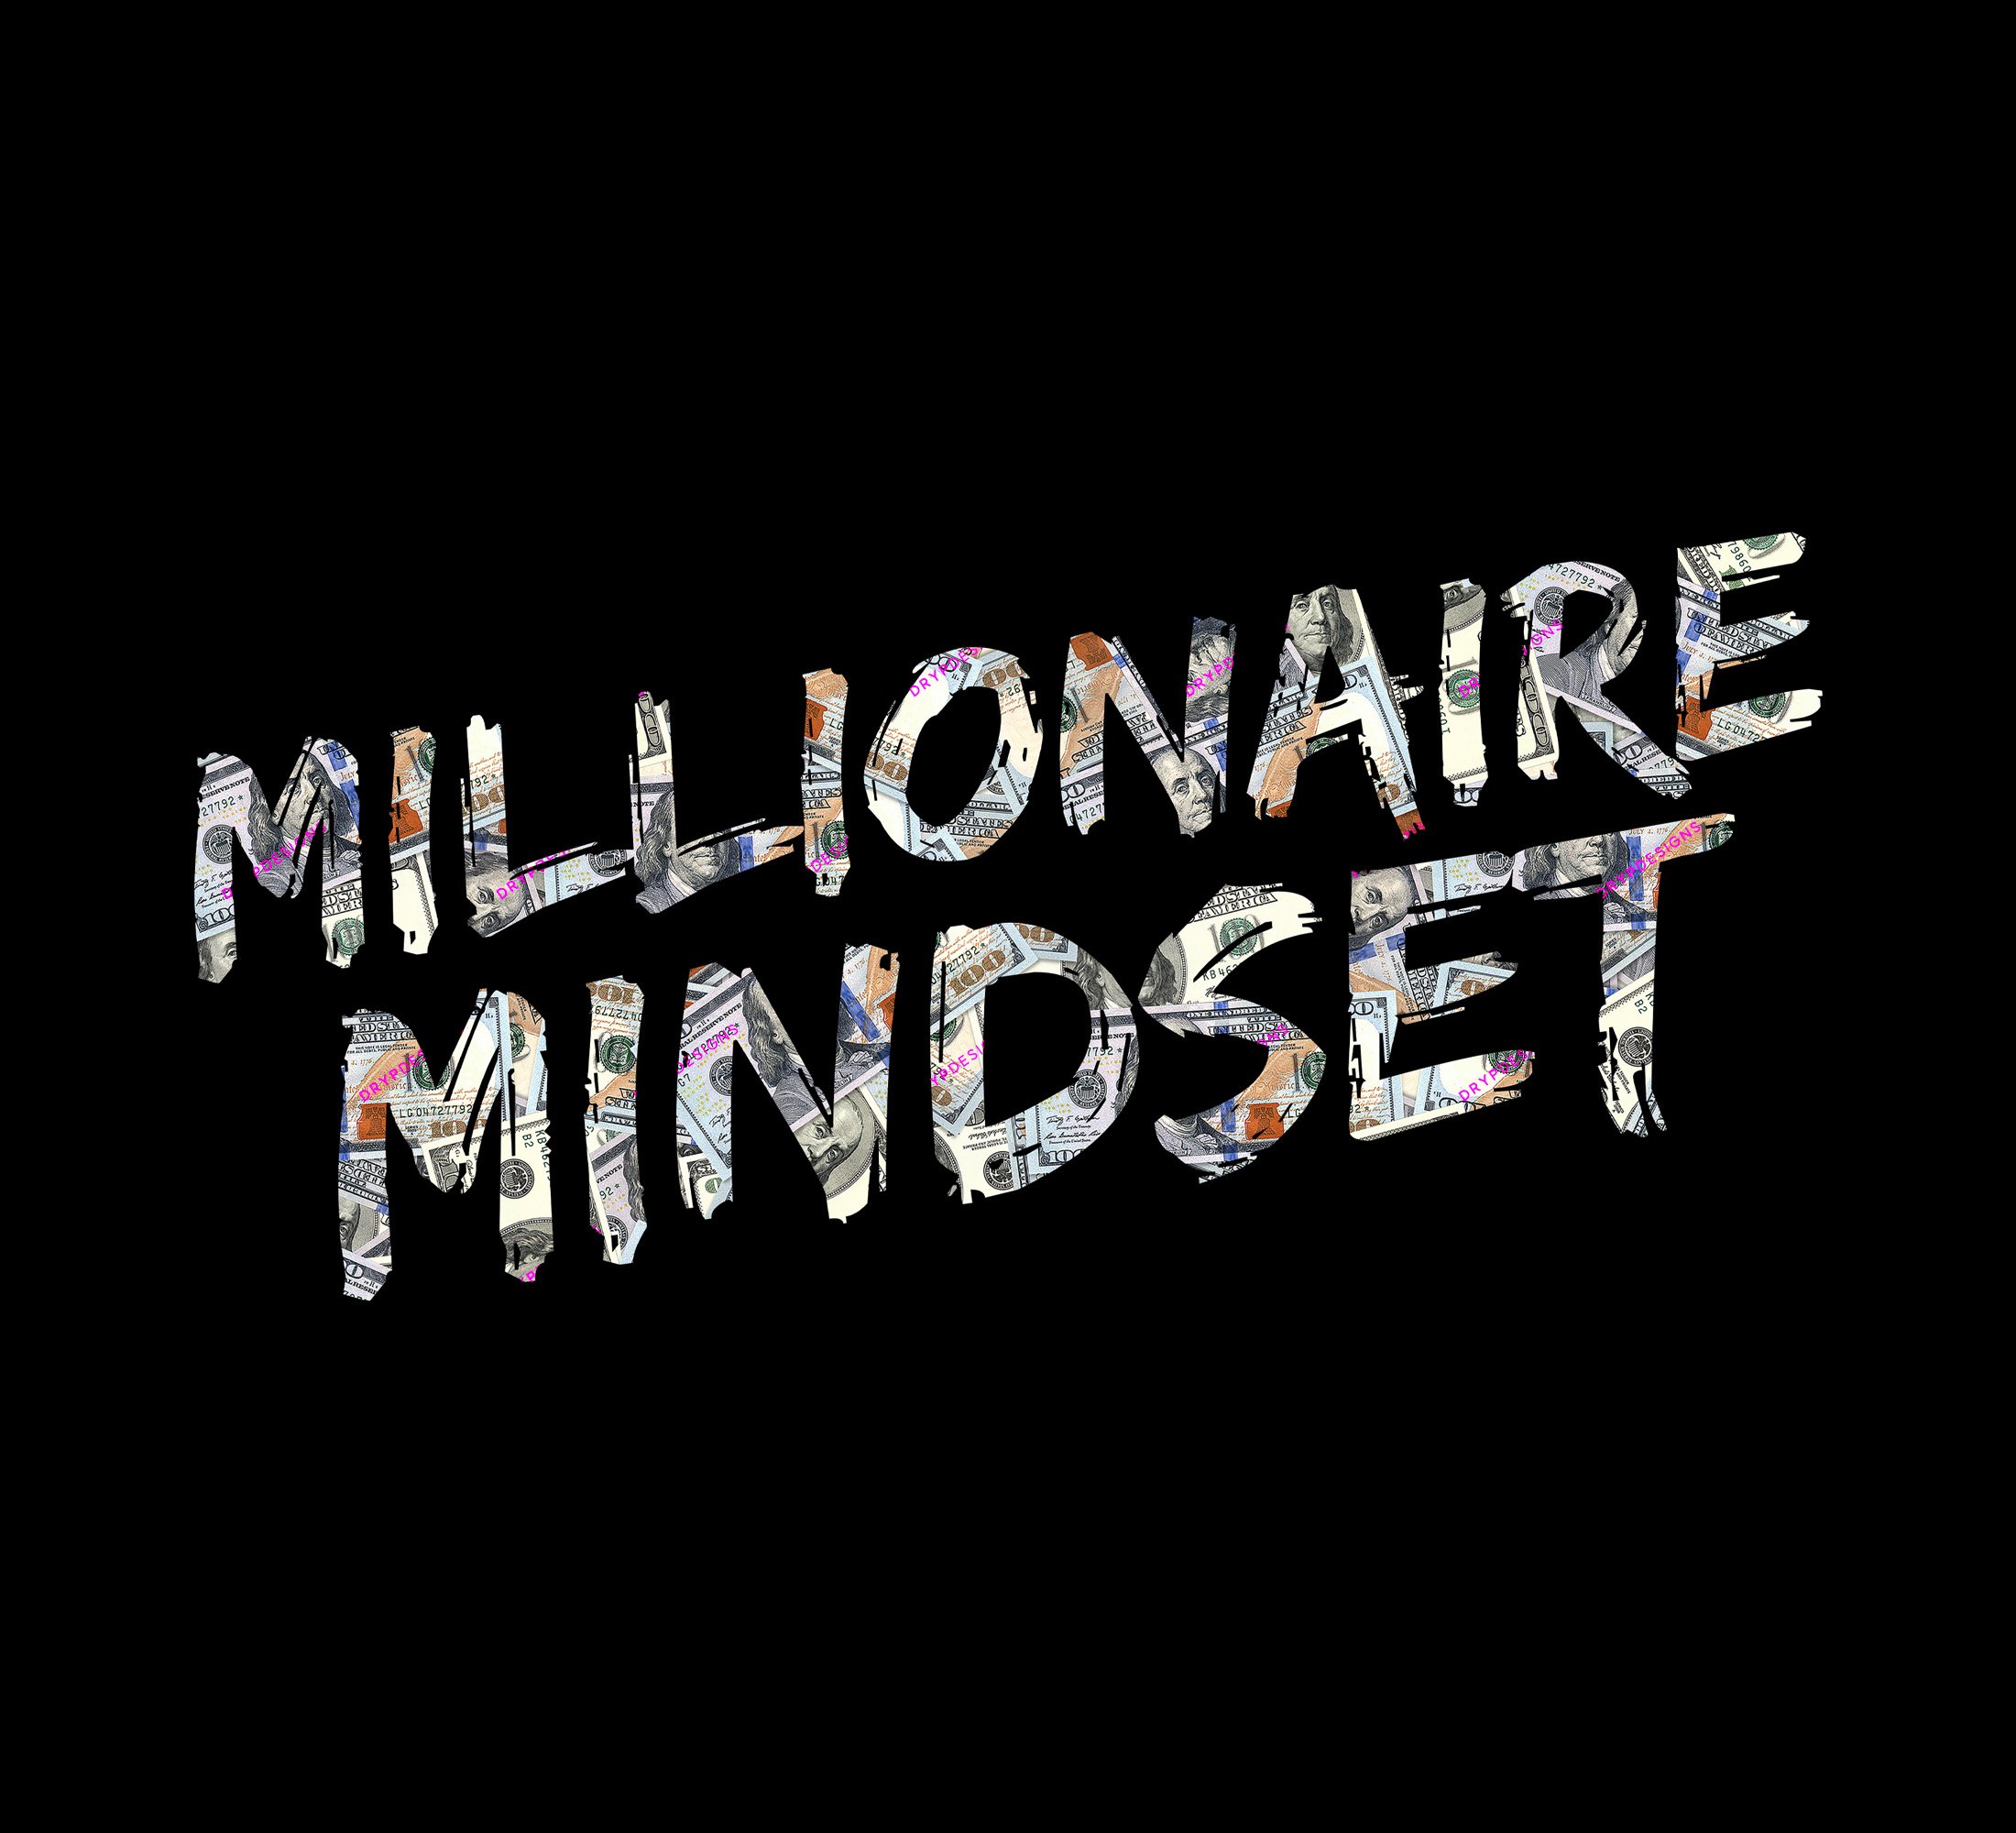 Millionaire Mindset by James Kim on Dribbble